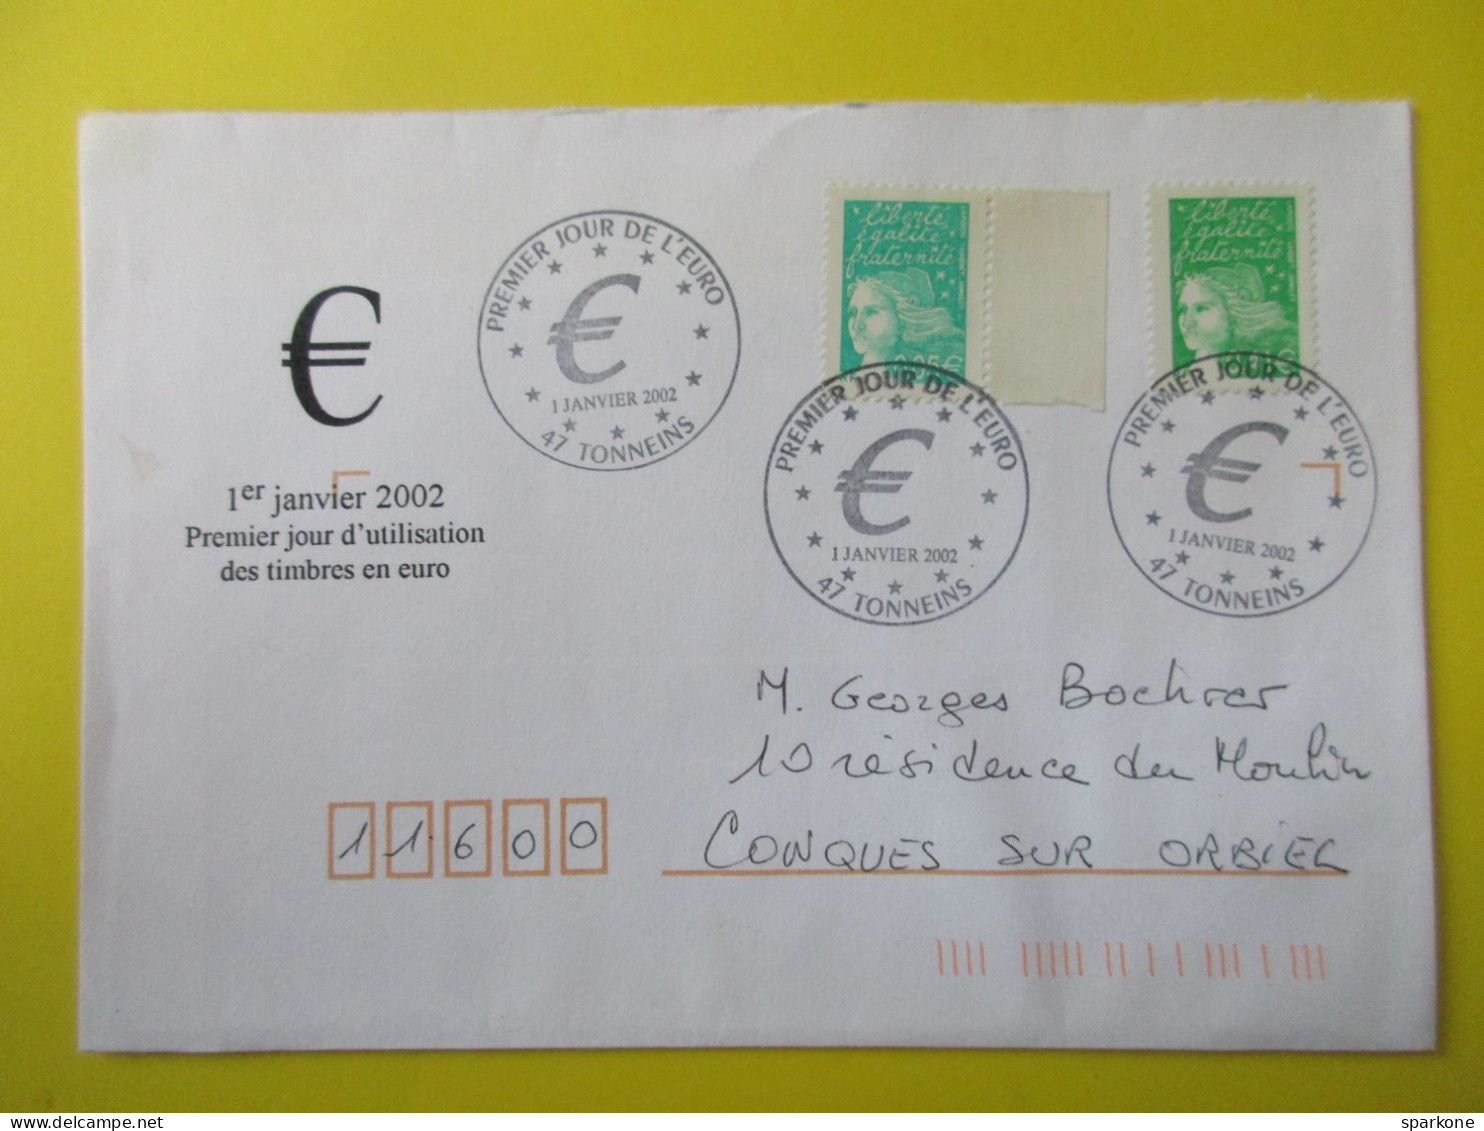 Marcophilie - Enveloppe - France - Cachet Commémoratif - Timbres Poste En €uros - 01 Janvier 2002 - Matasellos Conmemorativos